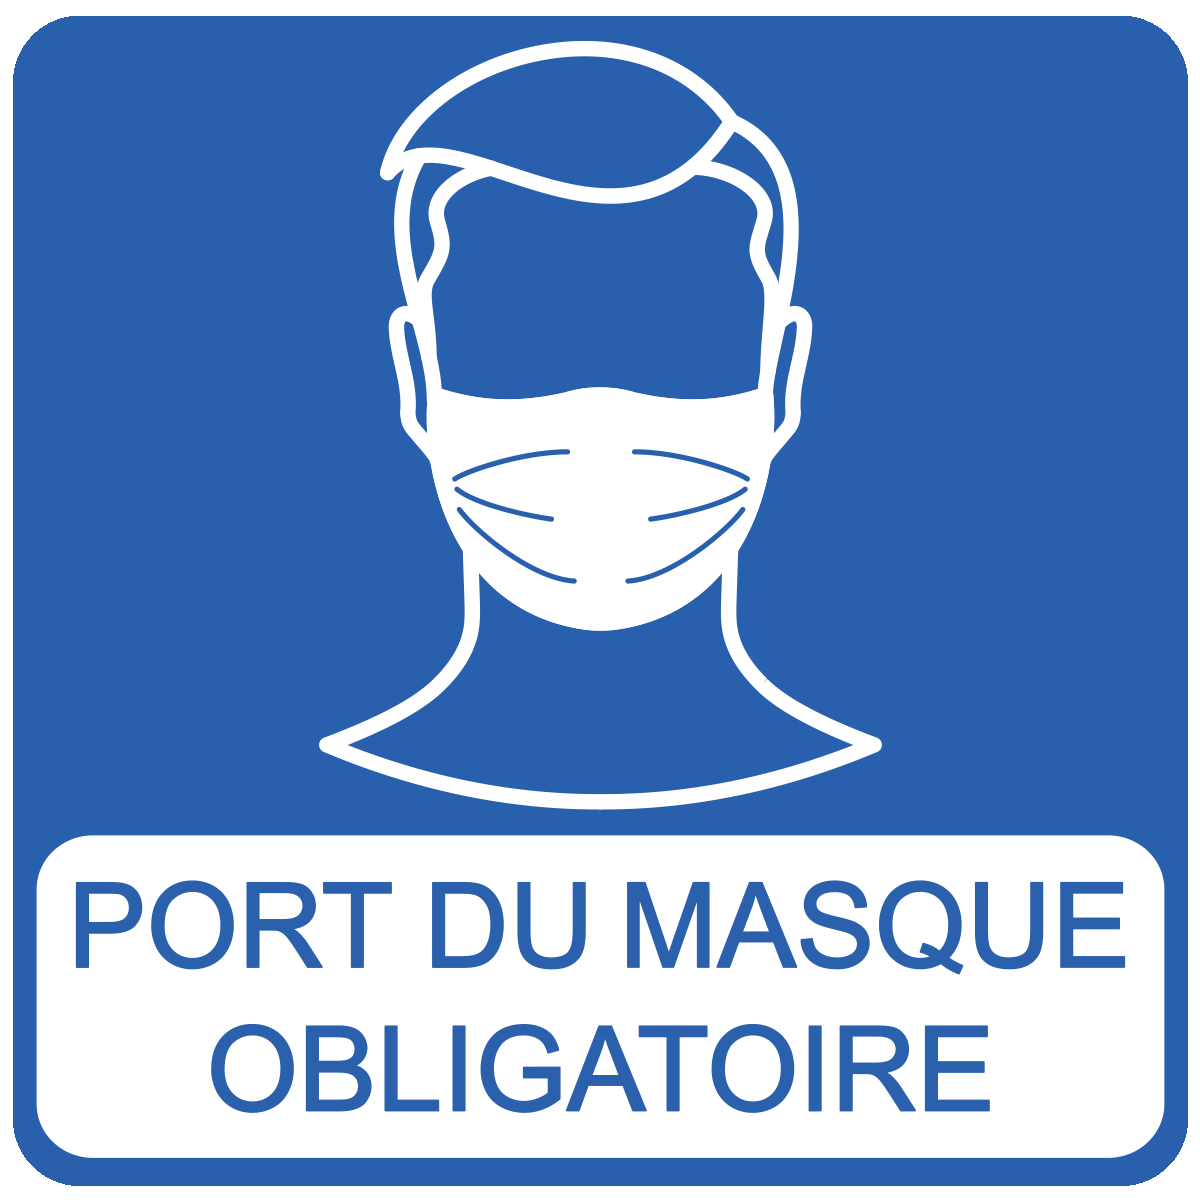 Port du masque obligatoire